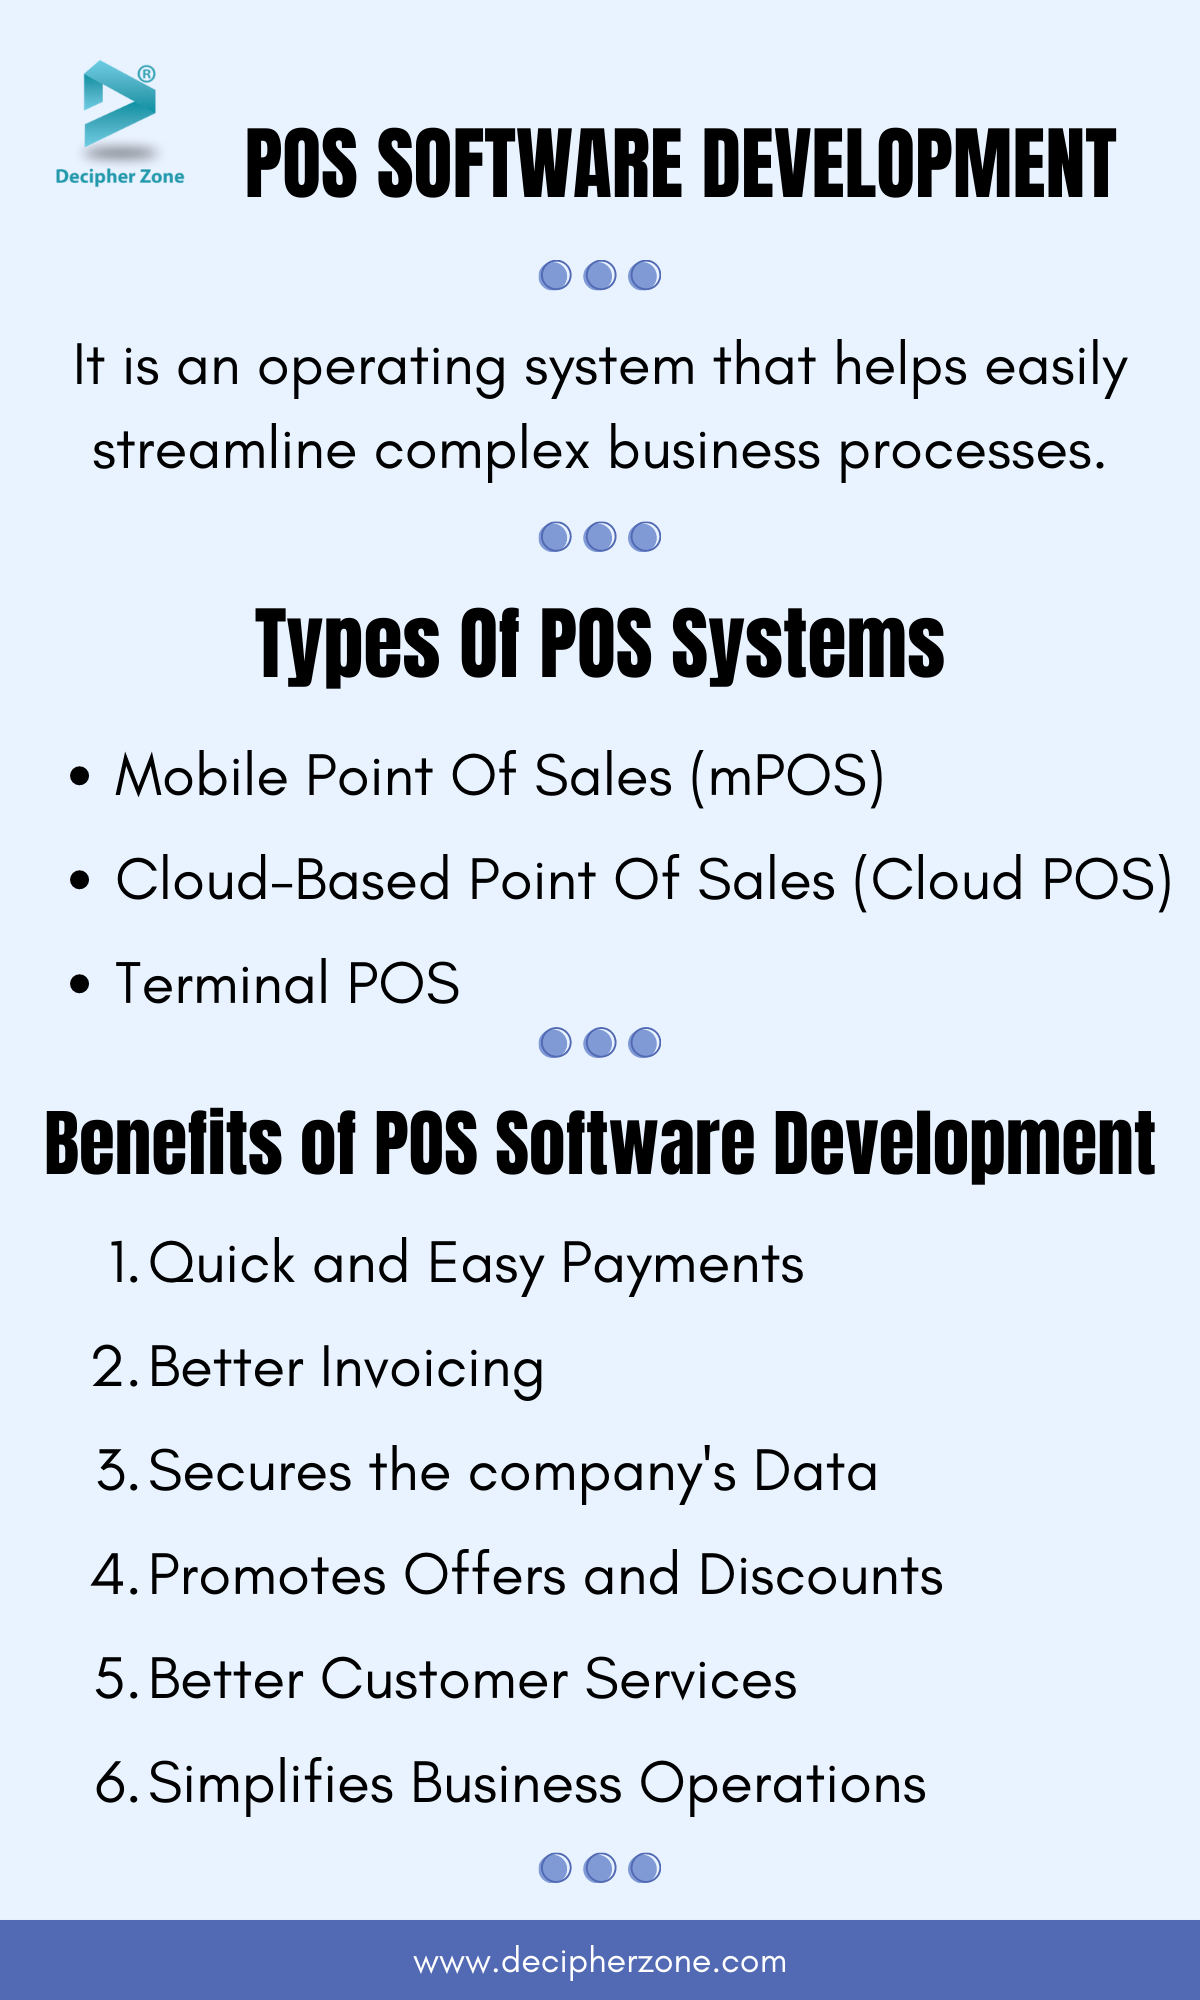 Benefits of POS Software Development